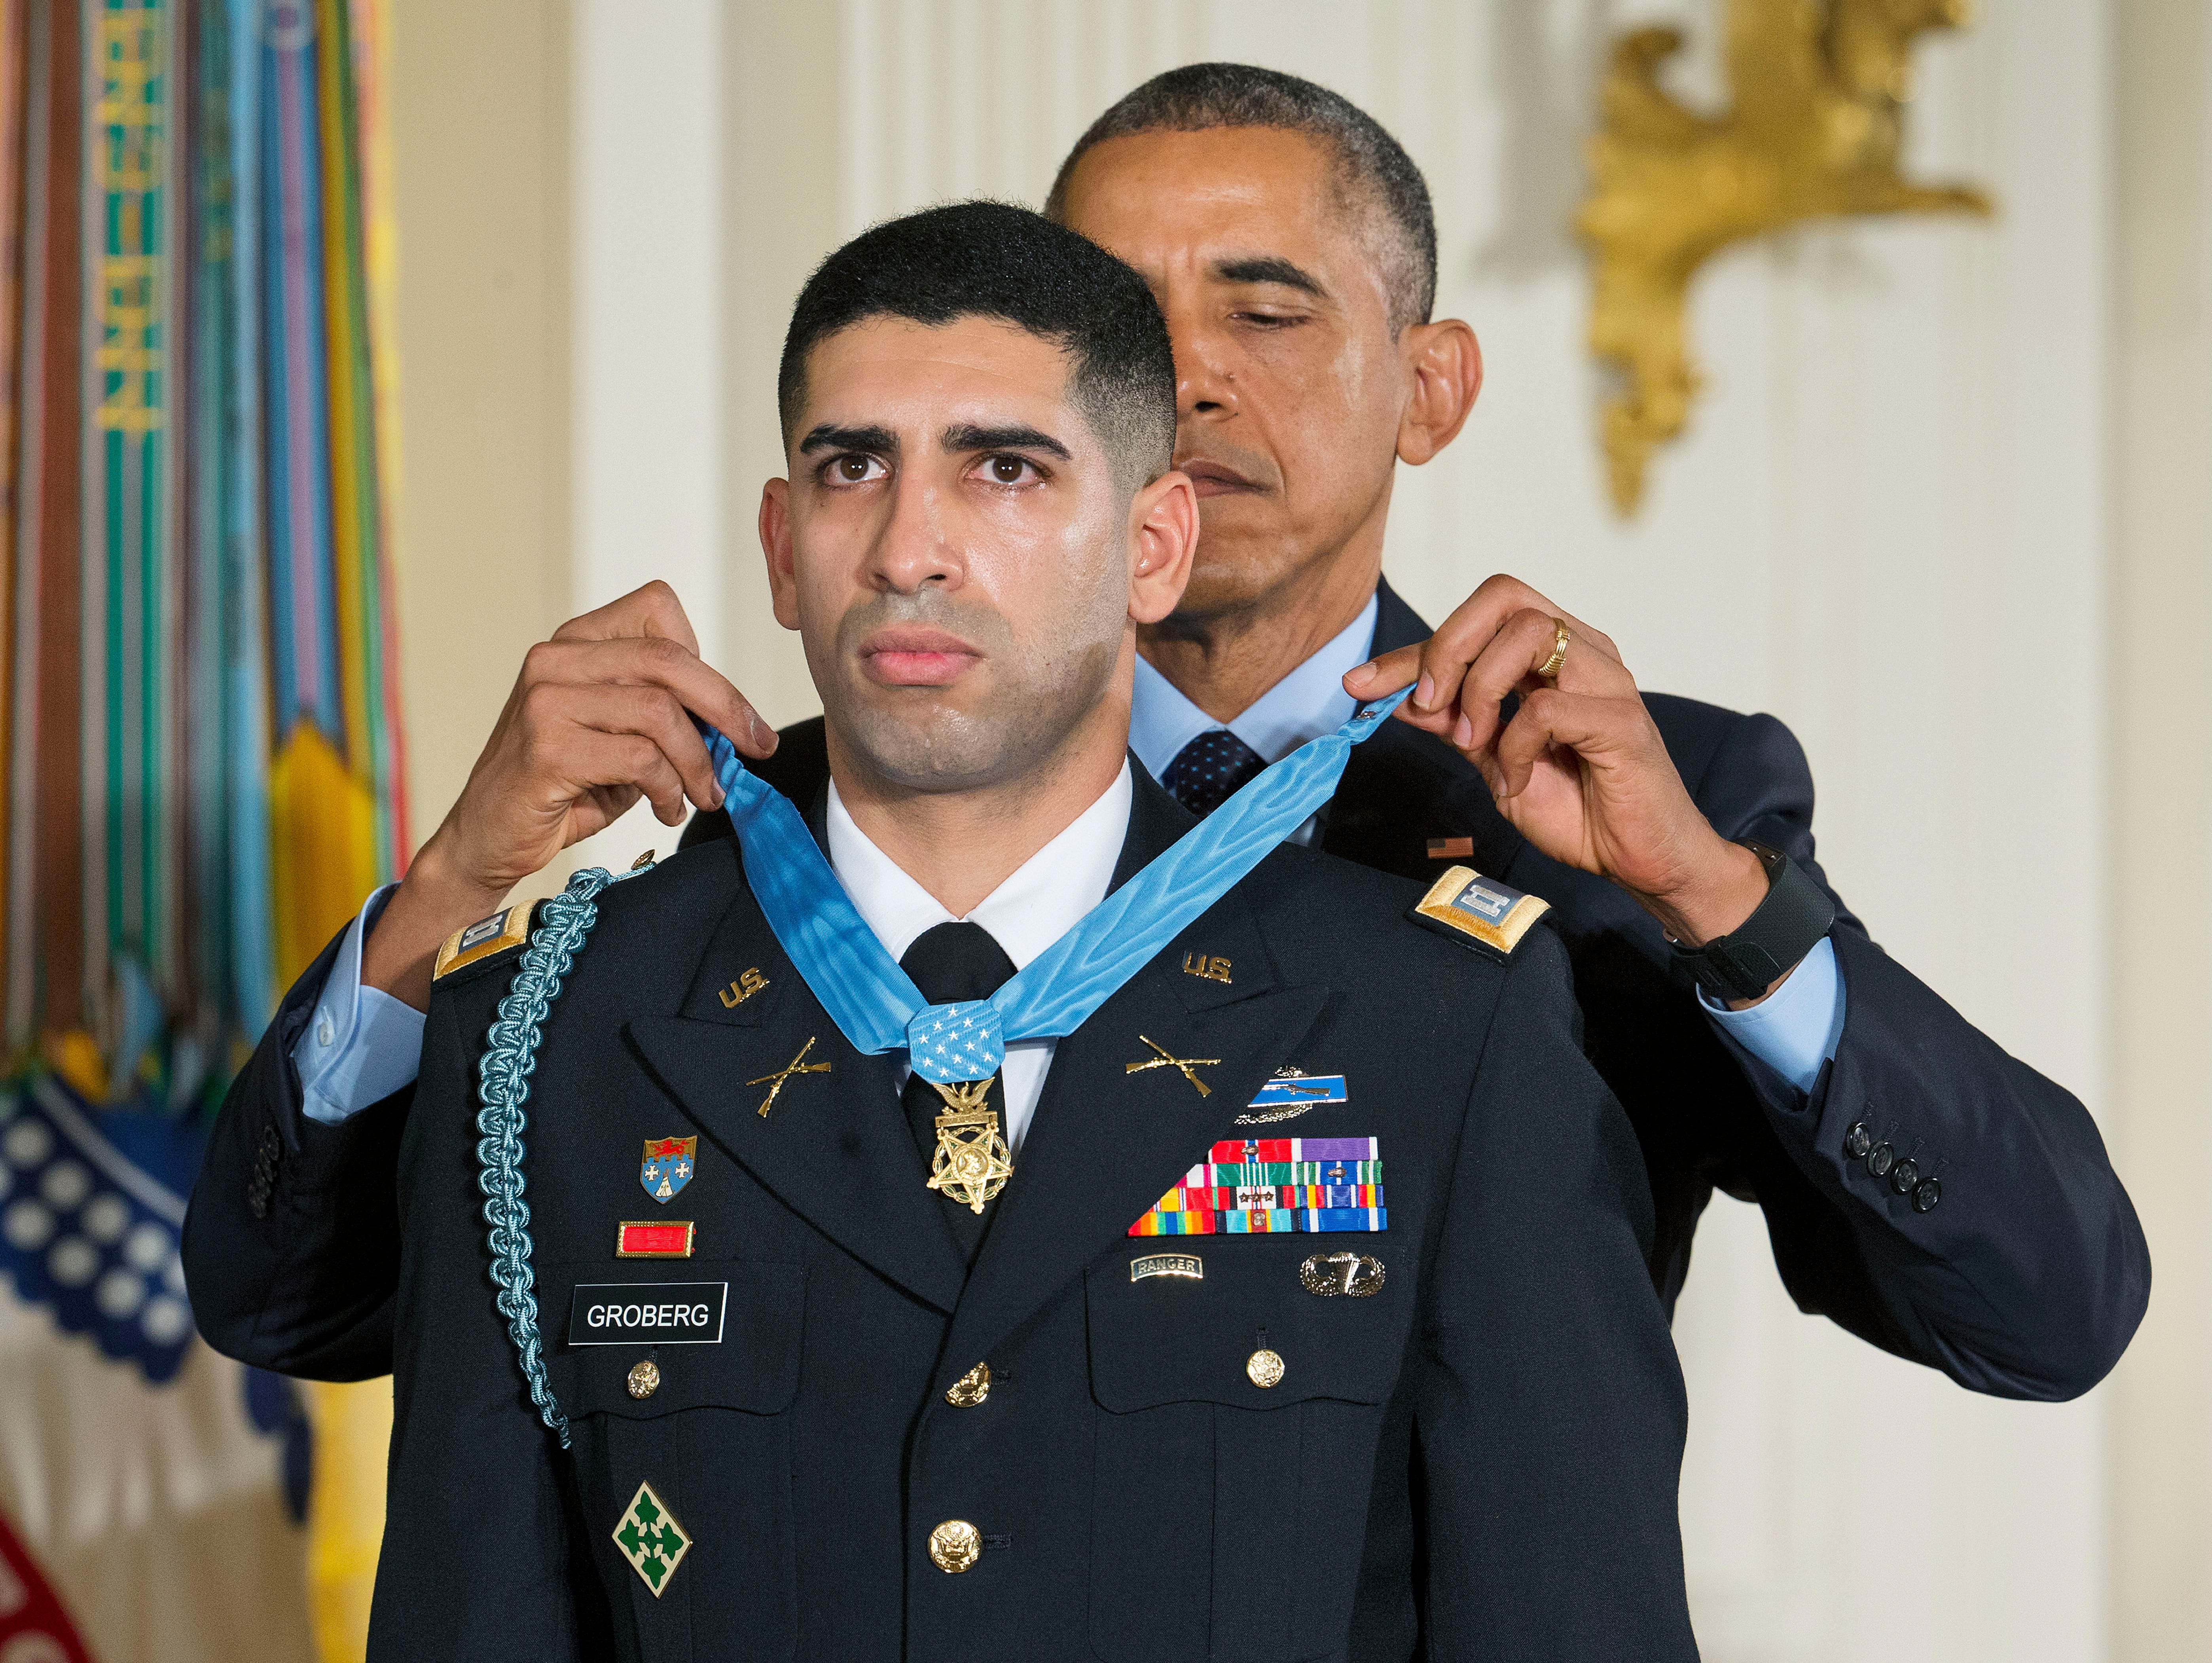 do medal of honor recipients get money?